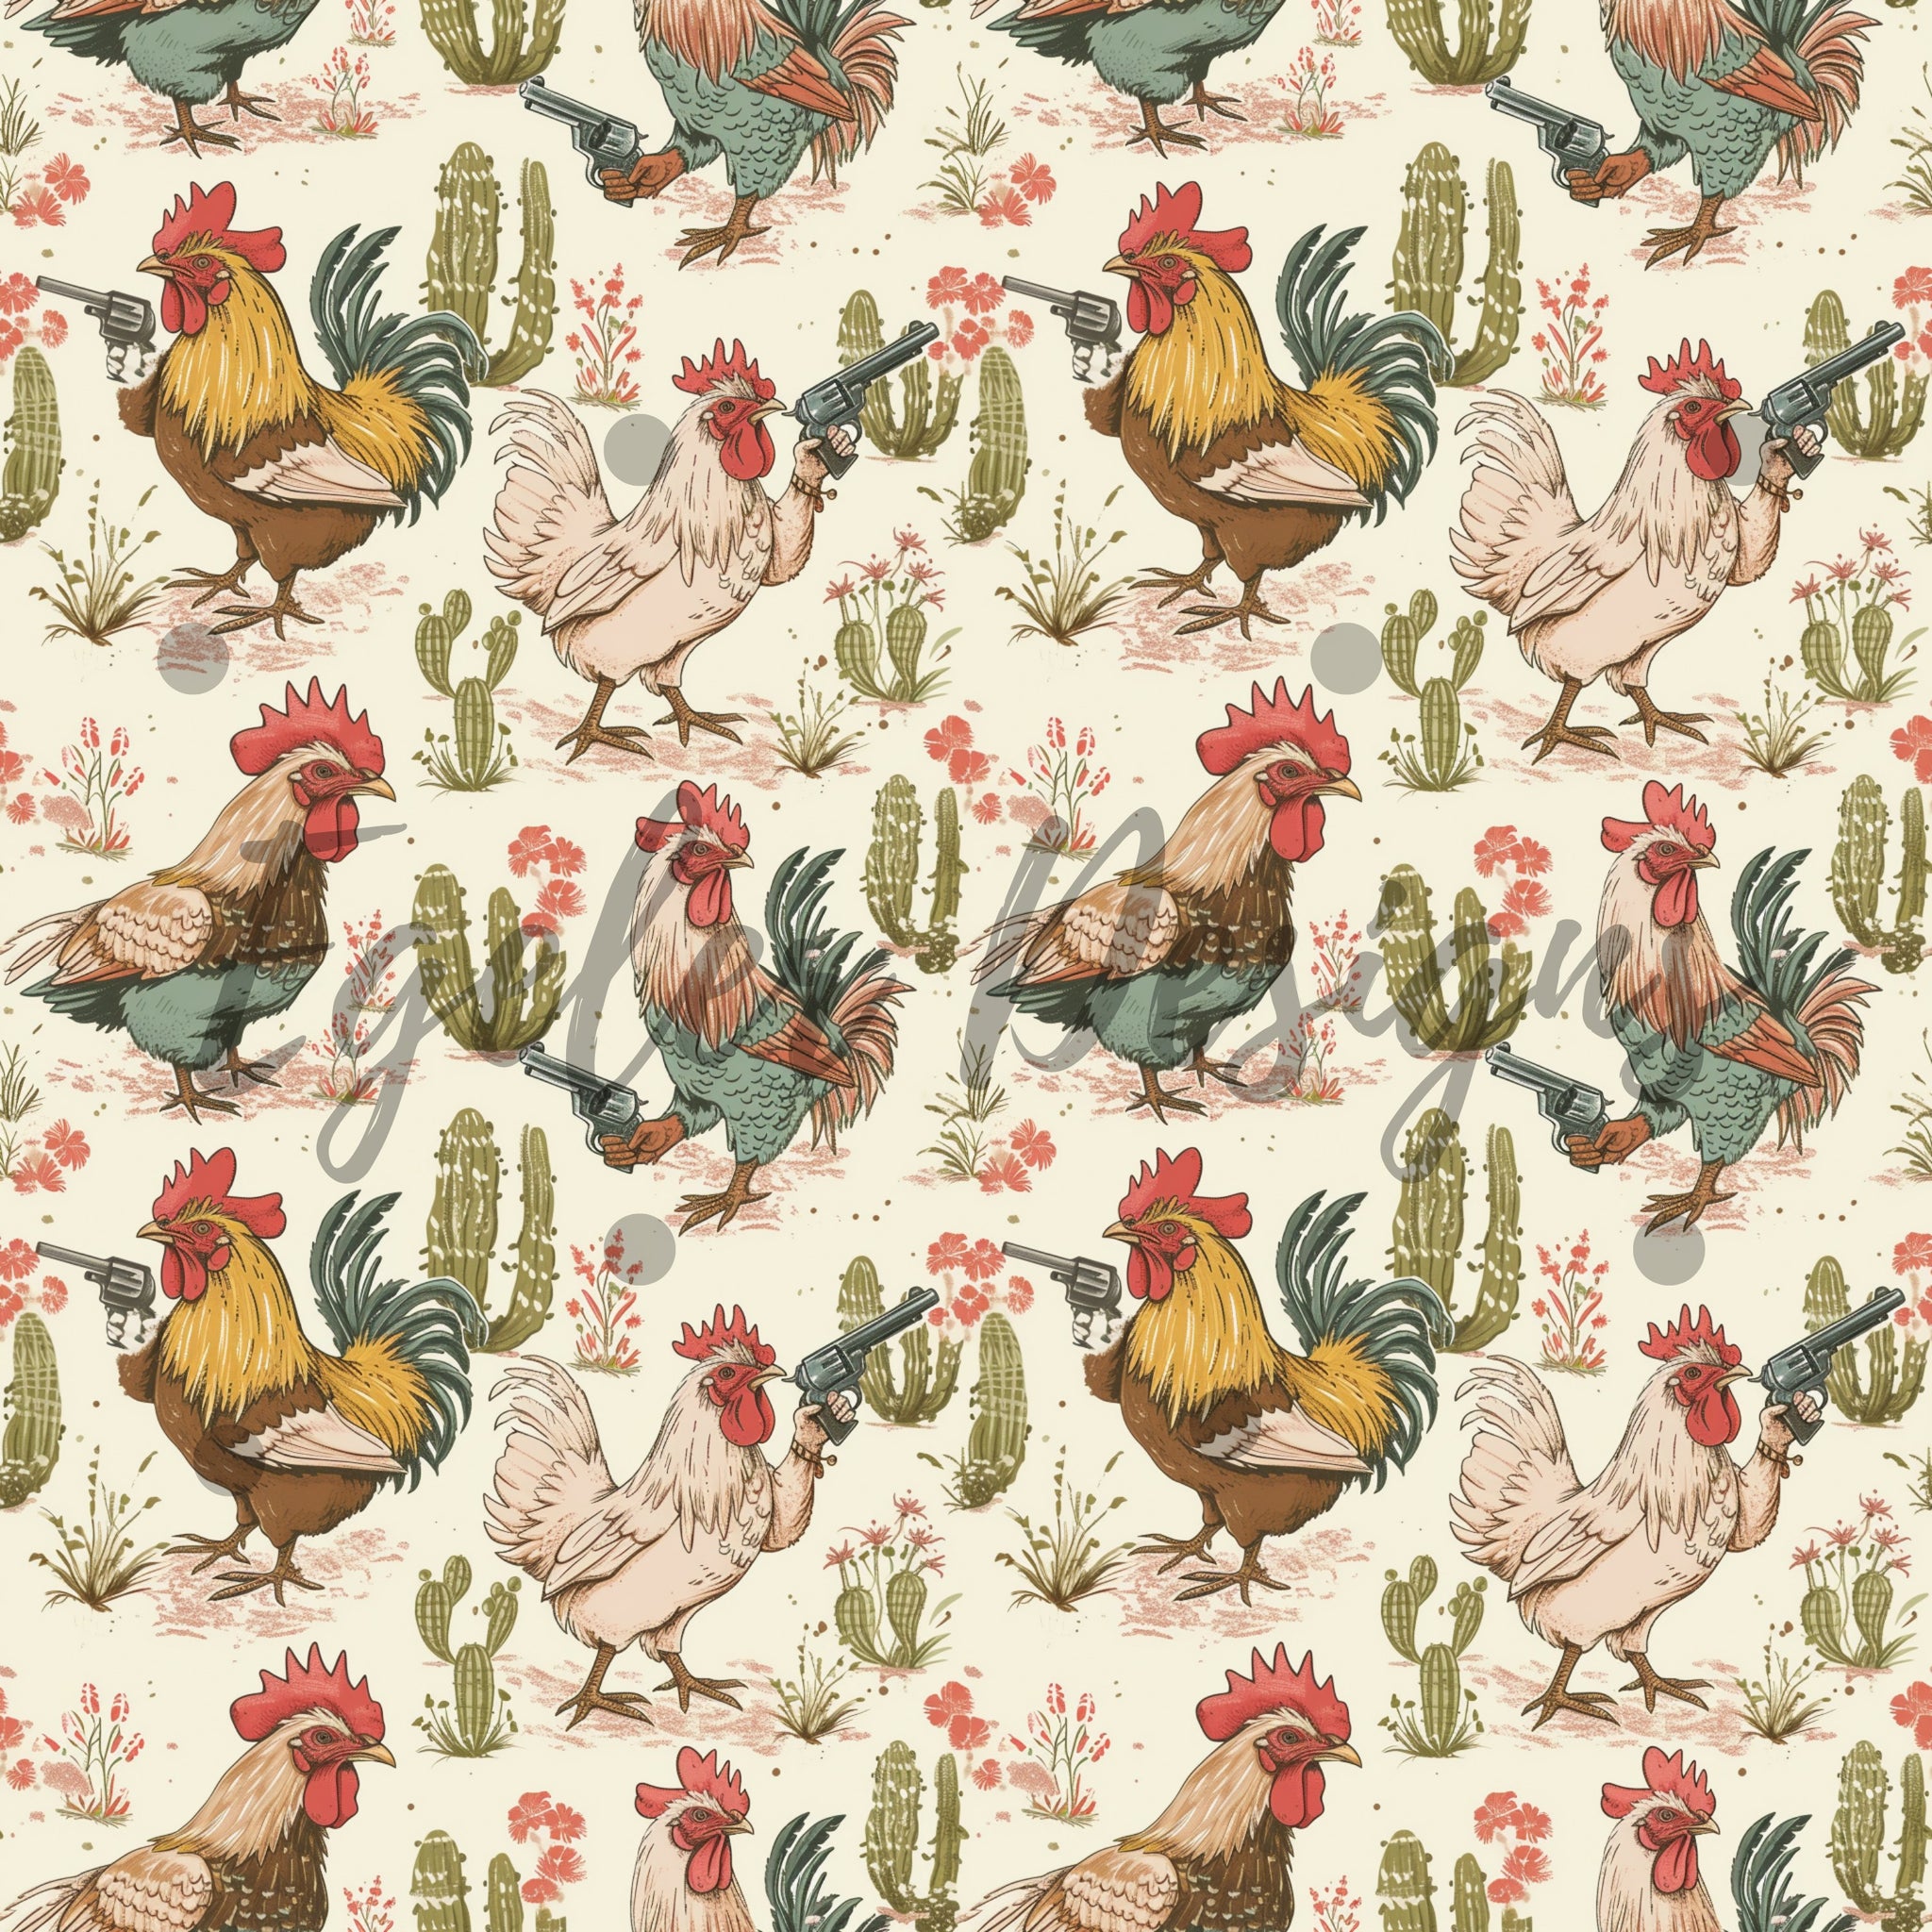 Western Revolver Chickens 2.0 Seamless Pattern Digital Download - LIMITED 30